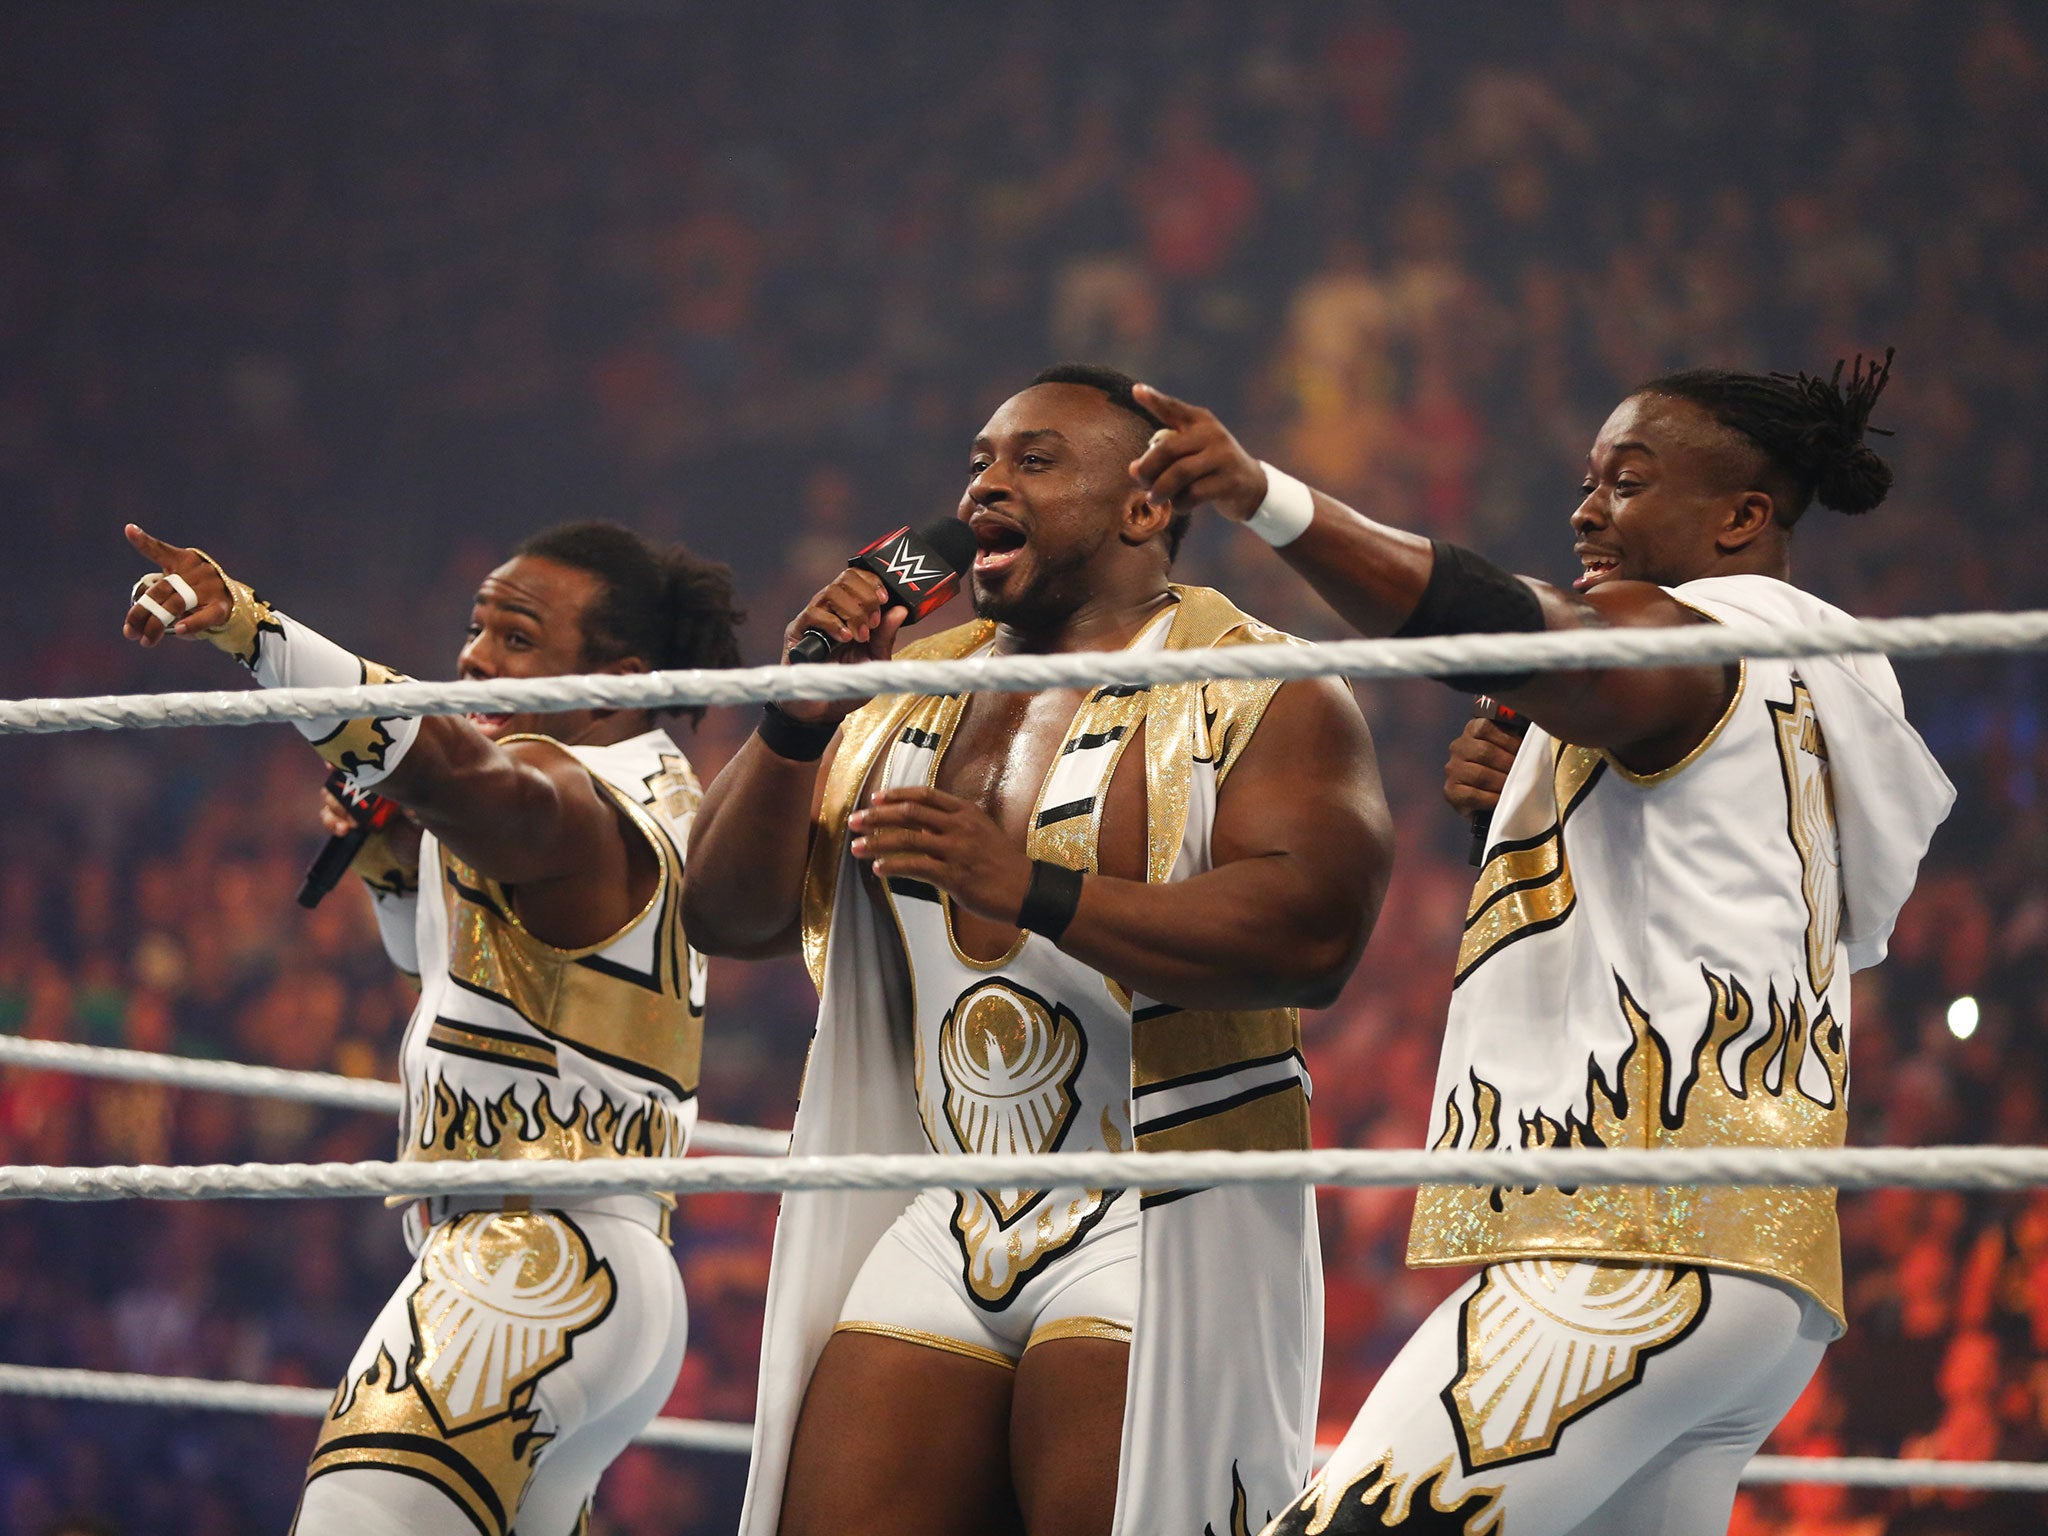 WWE Superstars Xavier Woods, Big E and Kofi Kingston make up New Day